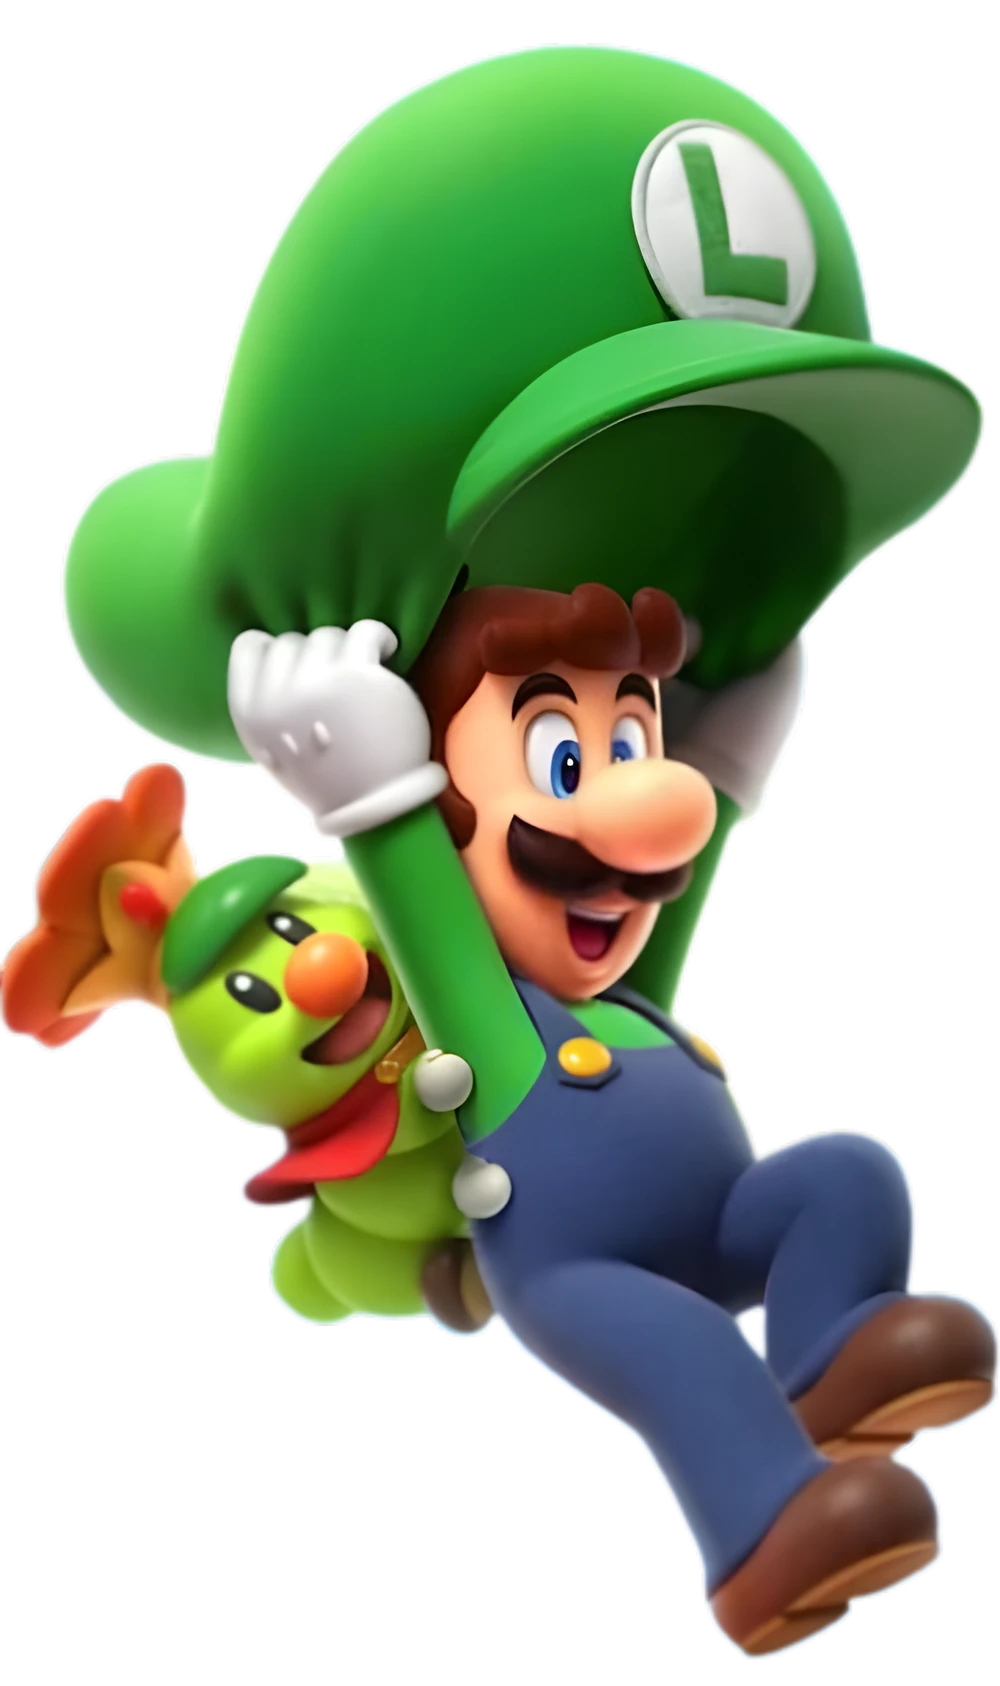 Mario (franchise) - Wikipedia